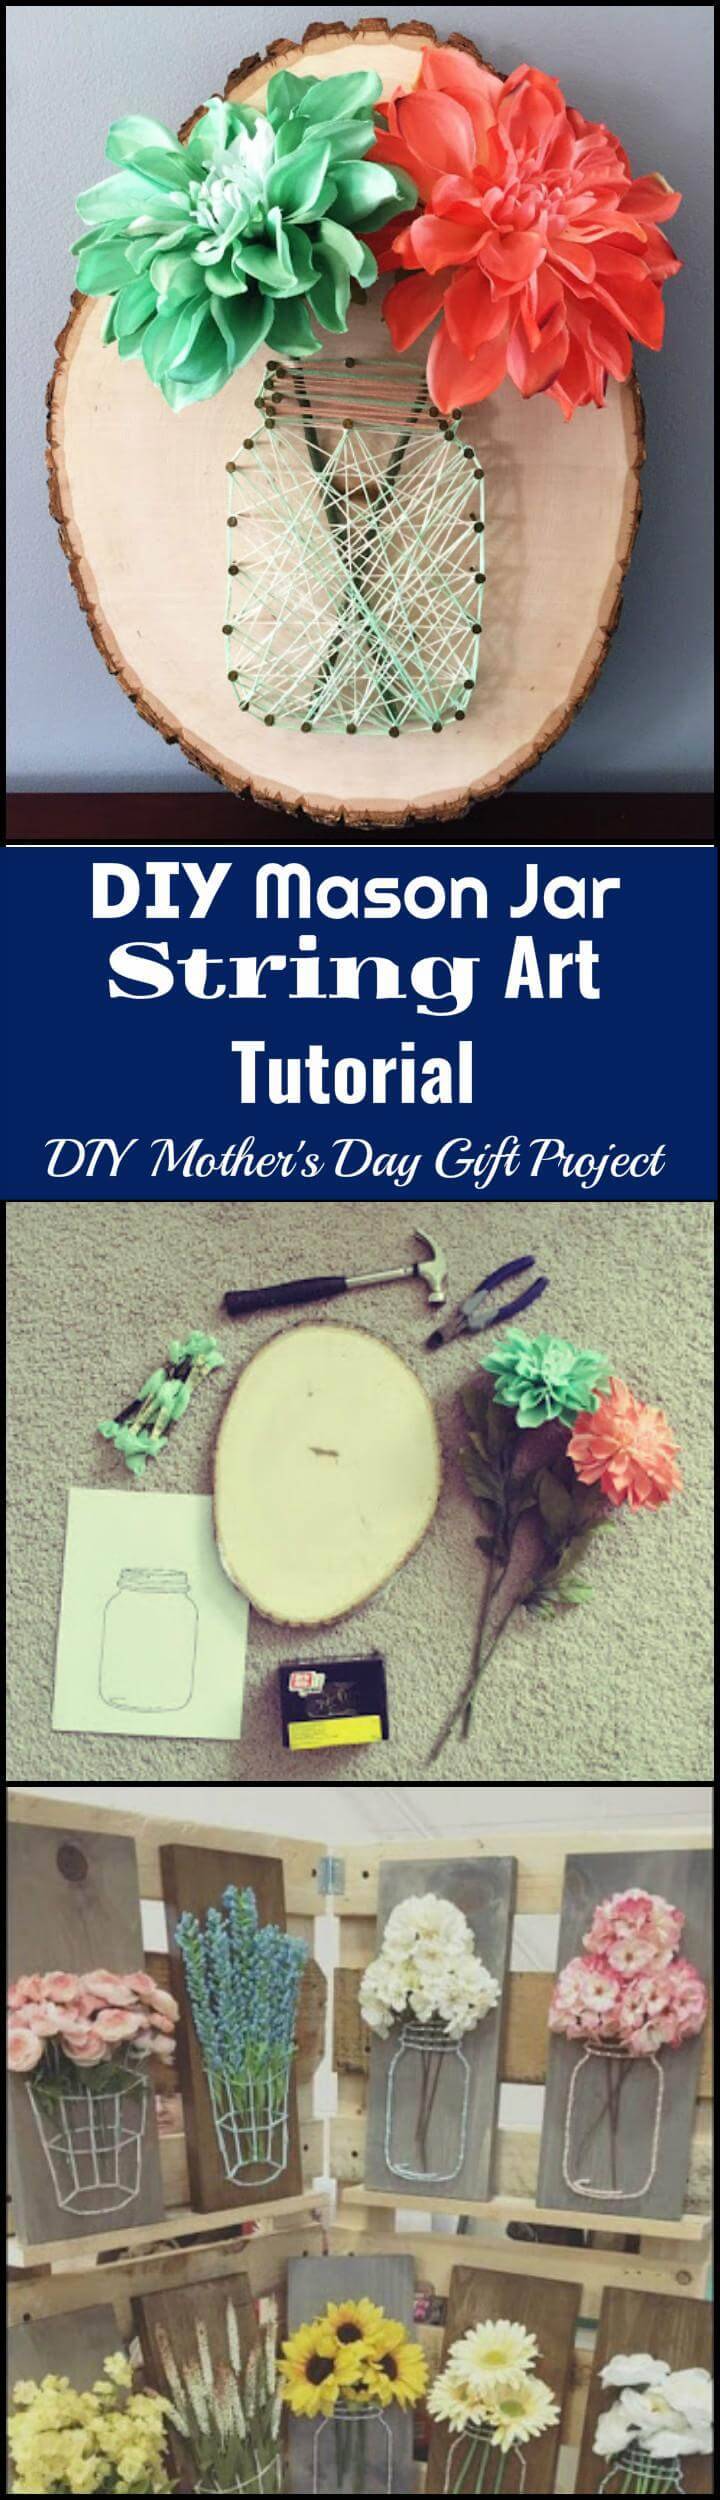 DIY Mason jar string art Mother's Day gift idea